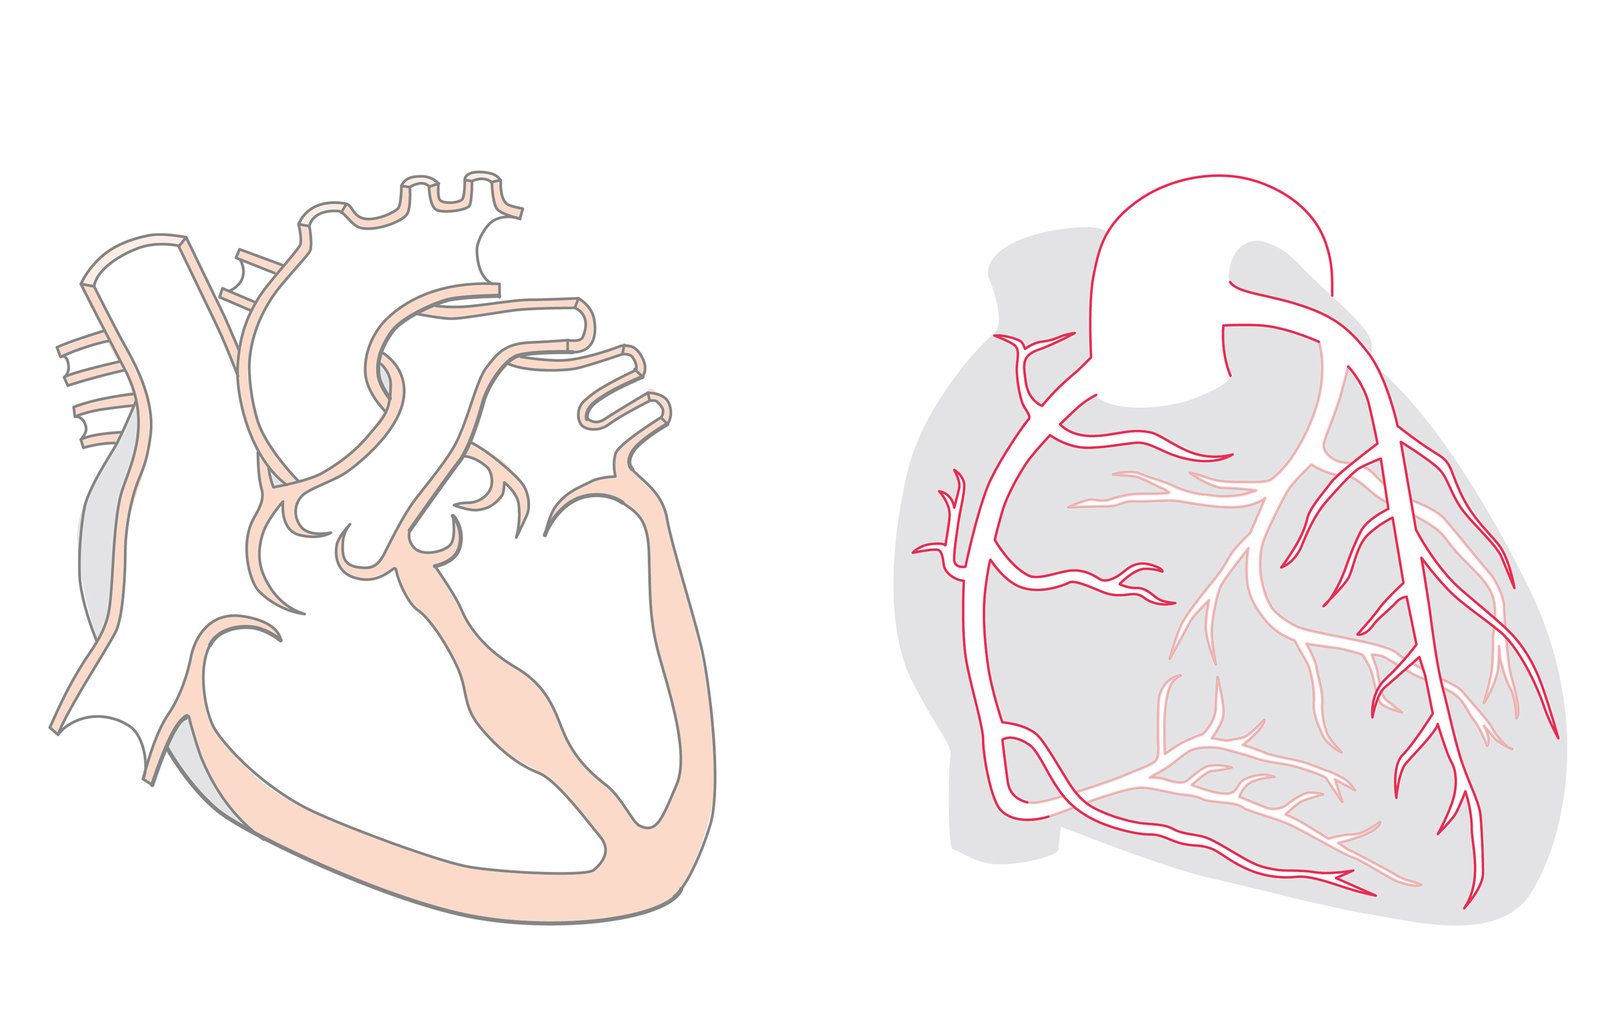 oculus-illustration-spital-herz-kardiologie-koronaren-schnitt